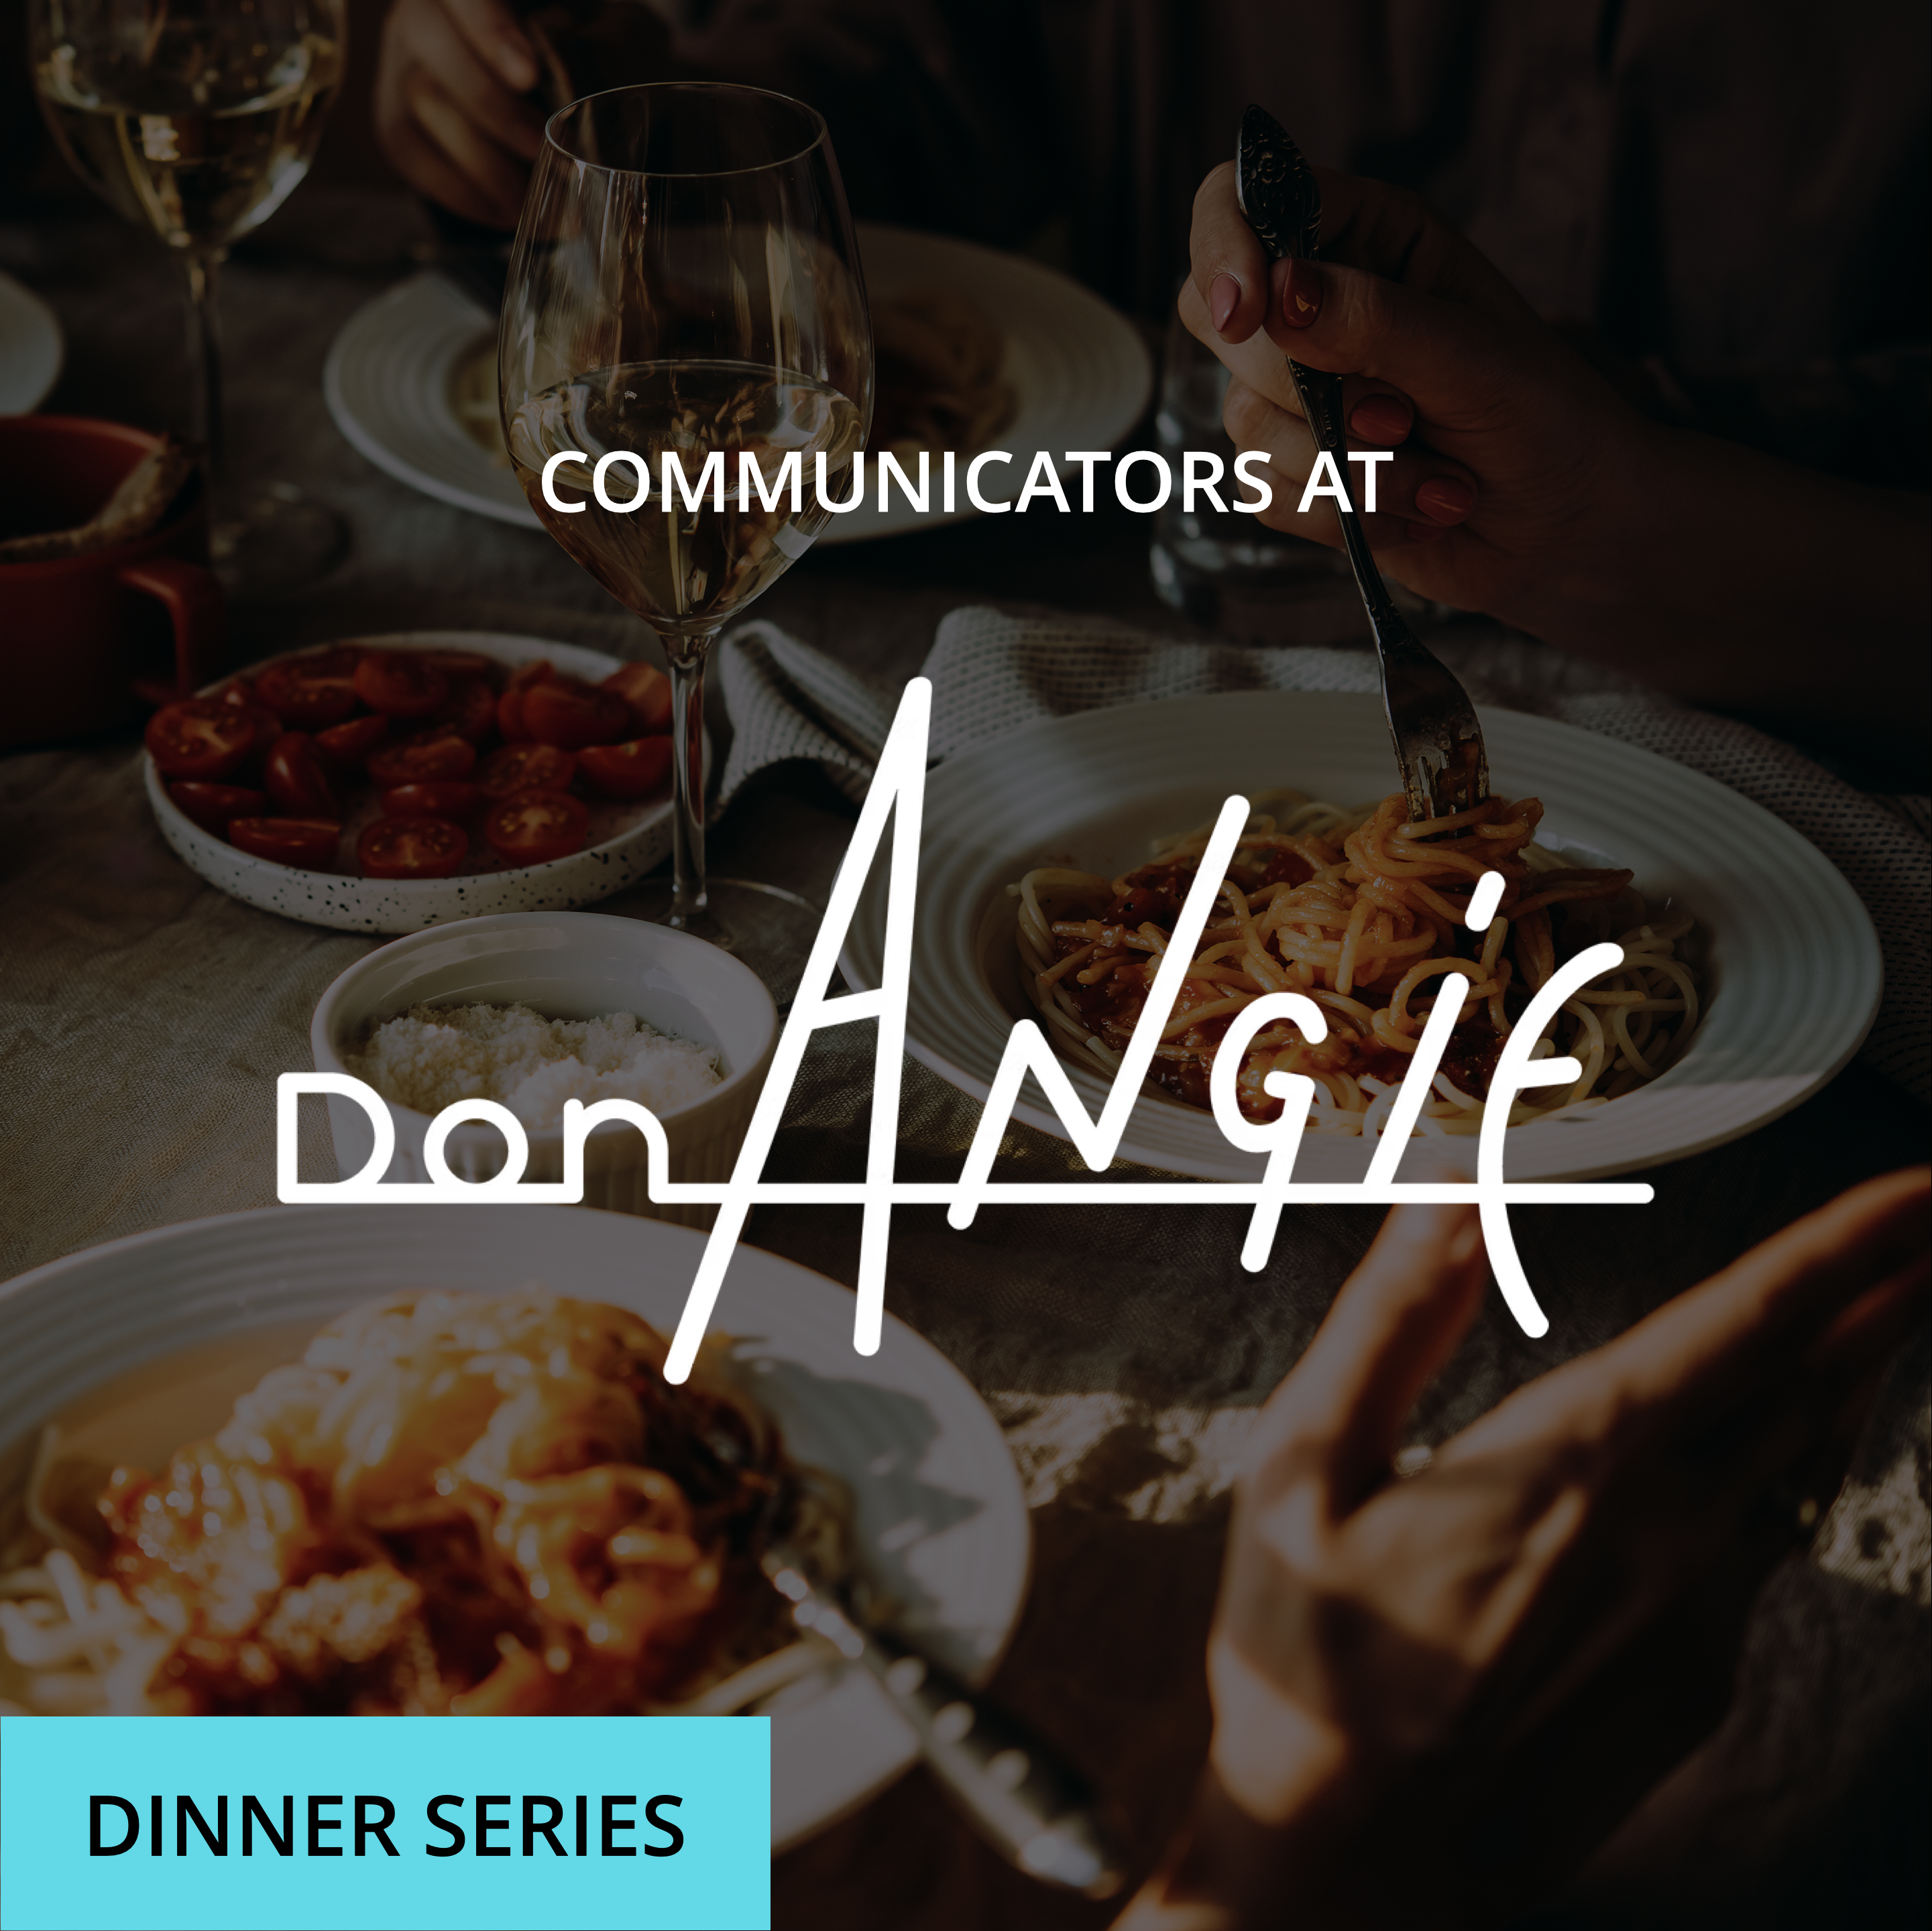 Don Angie dinner